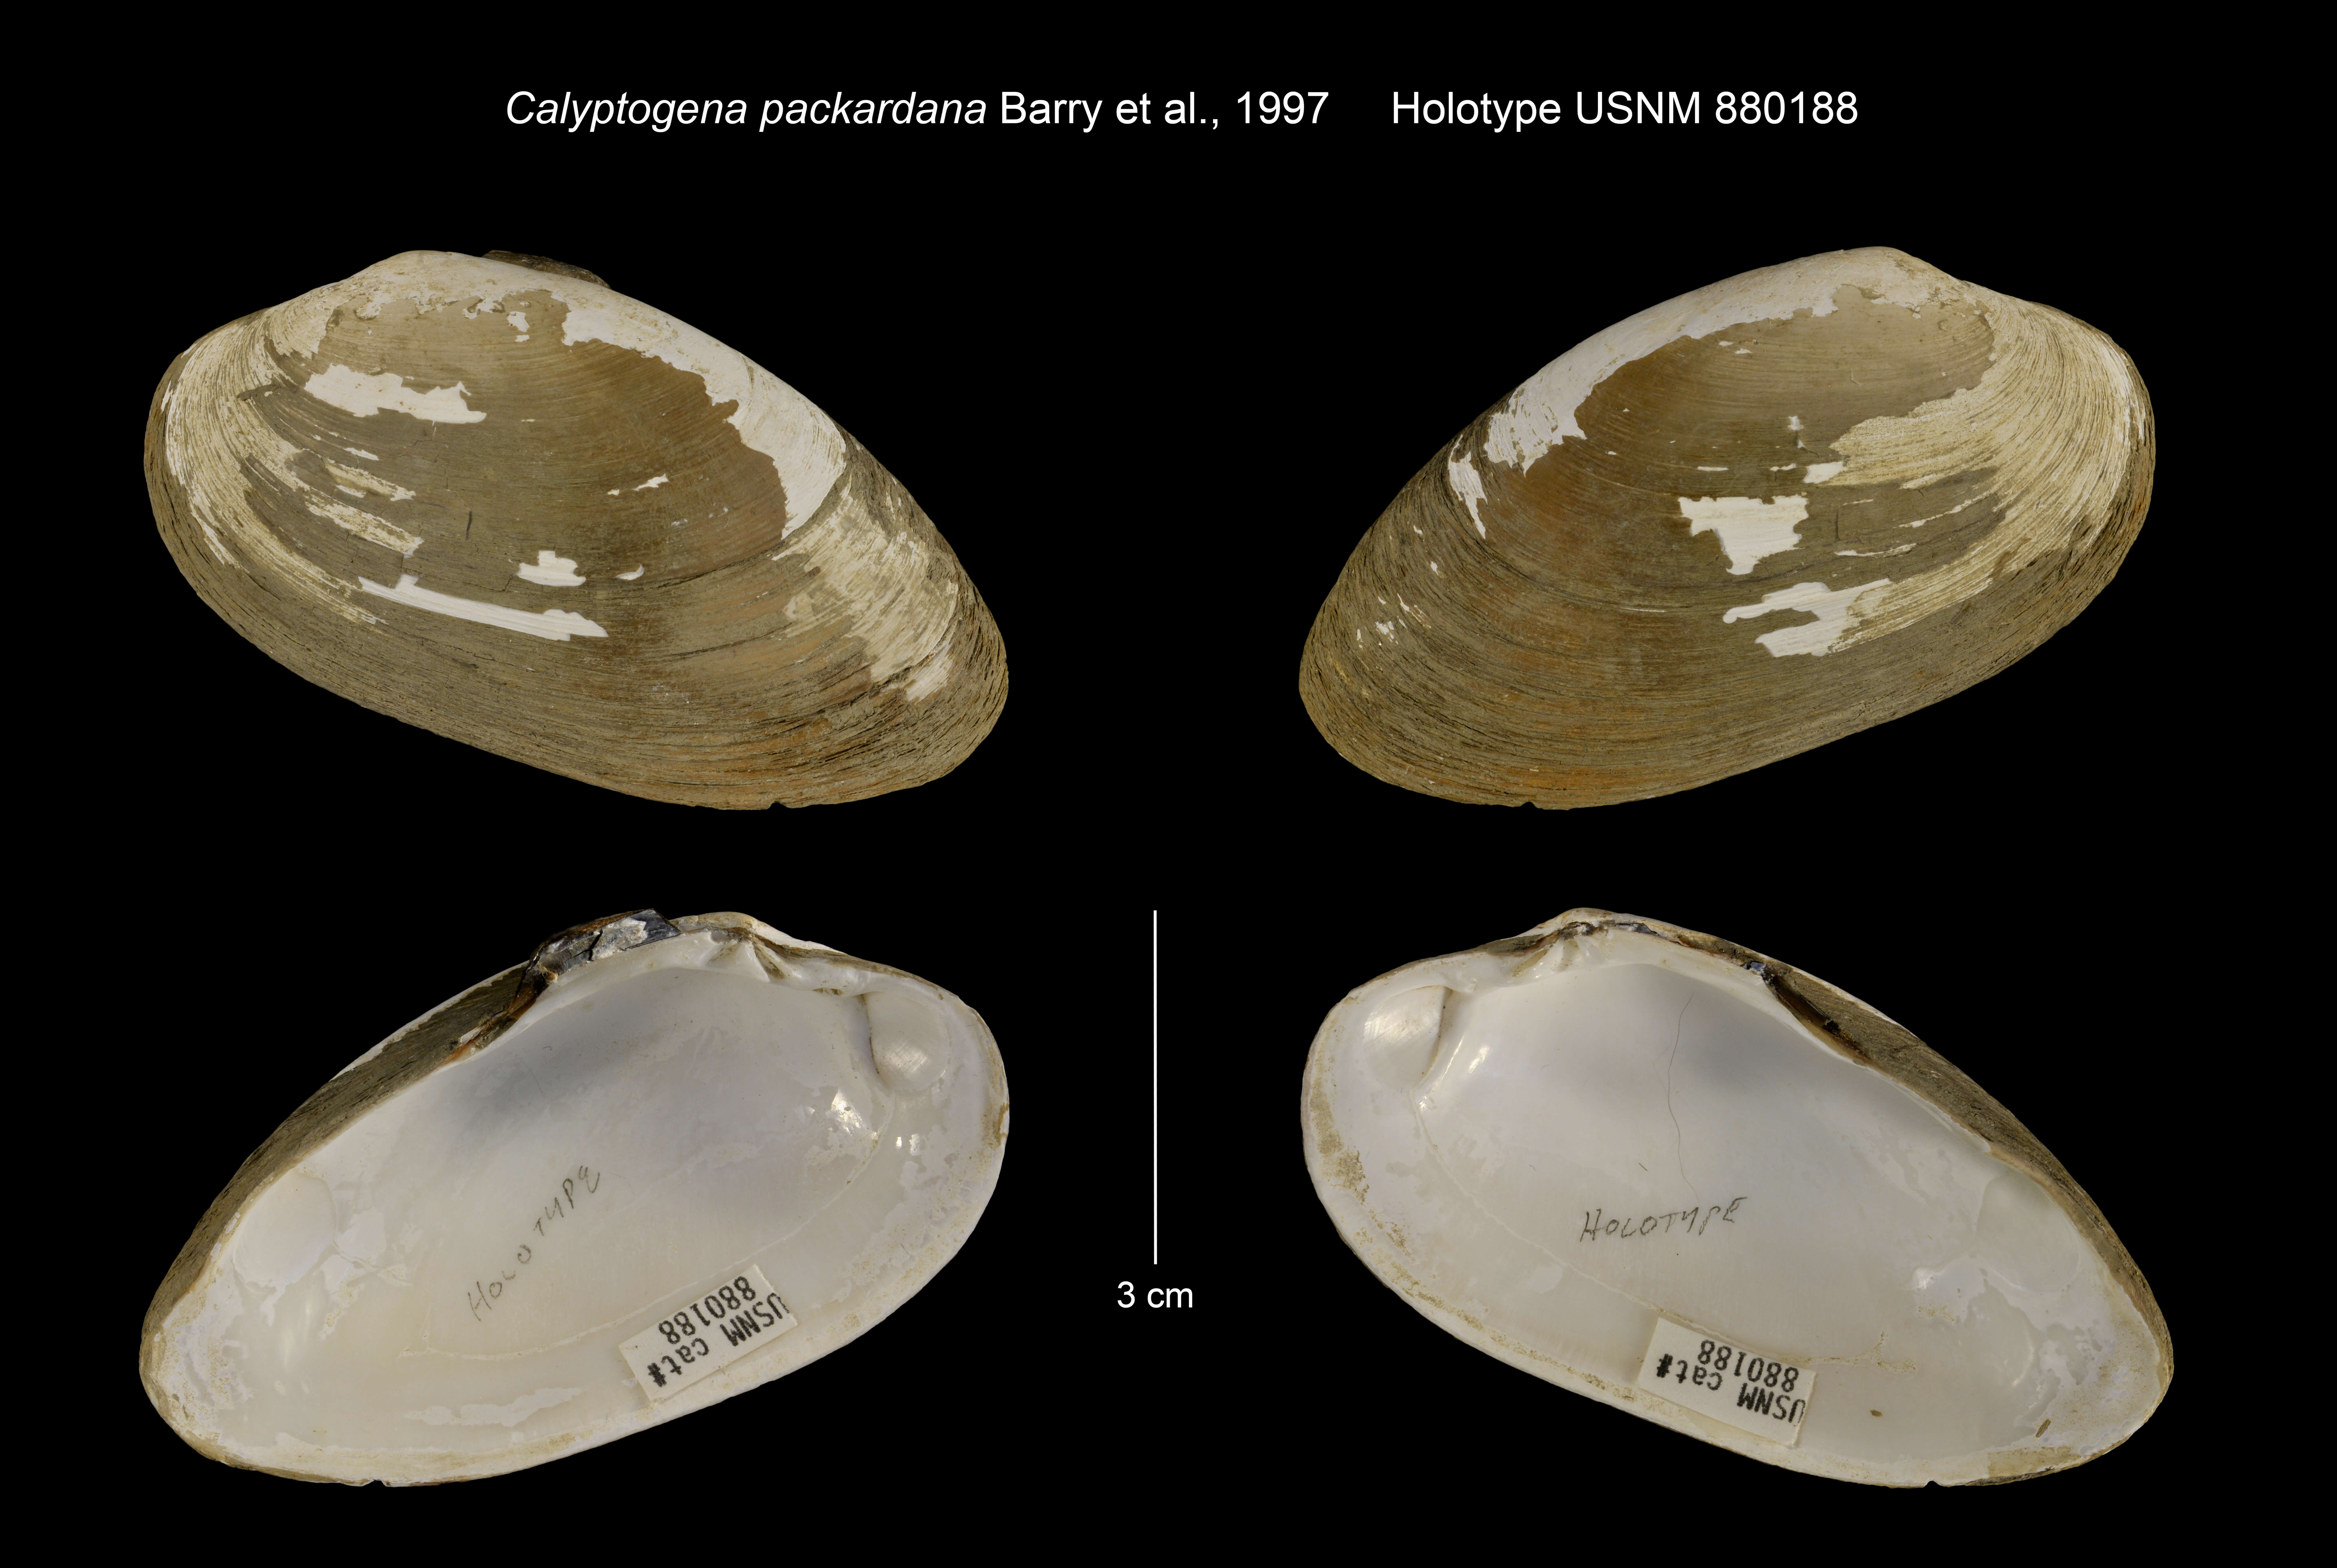 Image of Calyptogena packardana Barry, Kochevar, Baxter & Harrold 1997